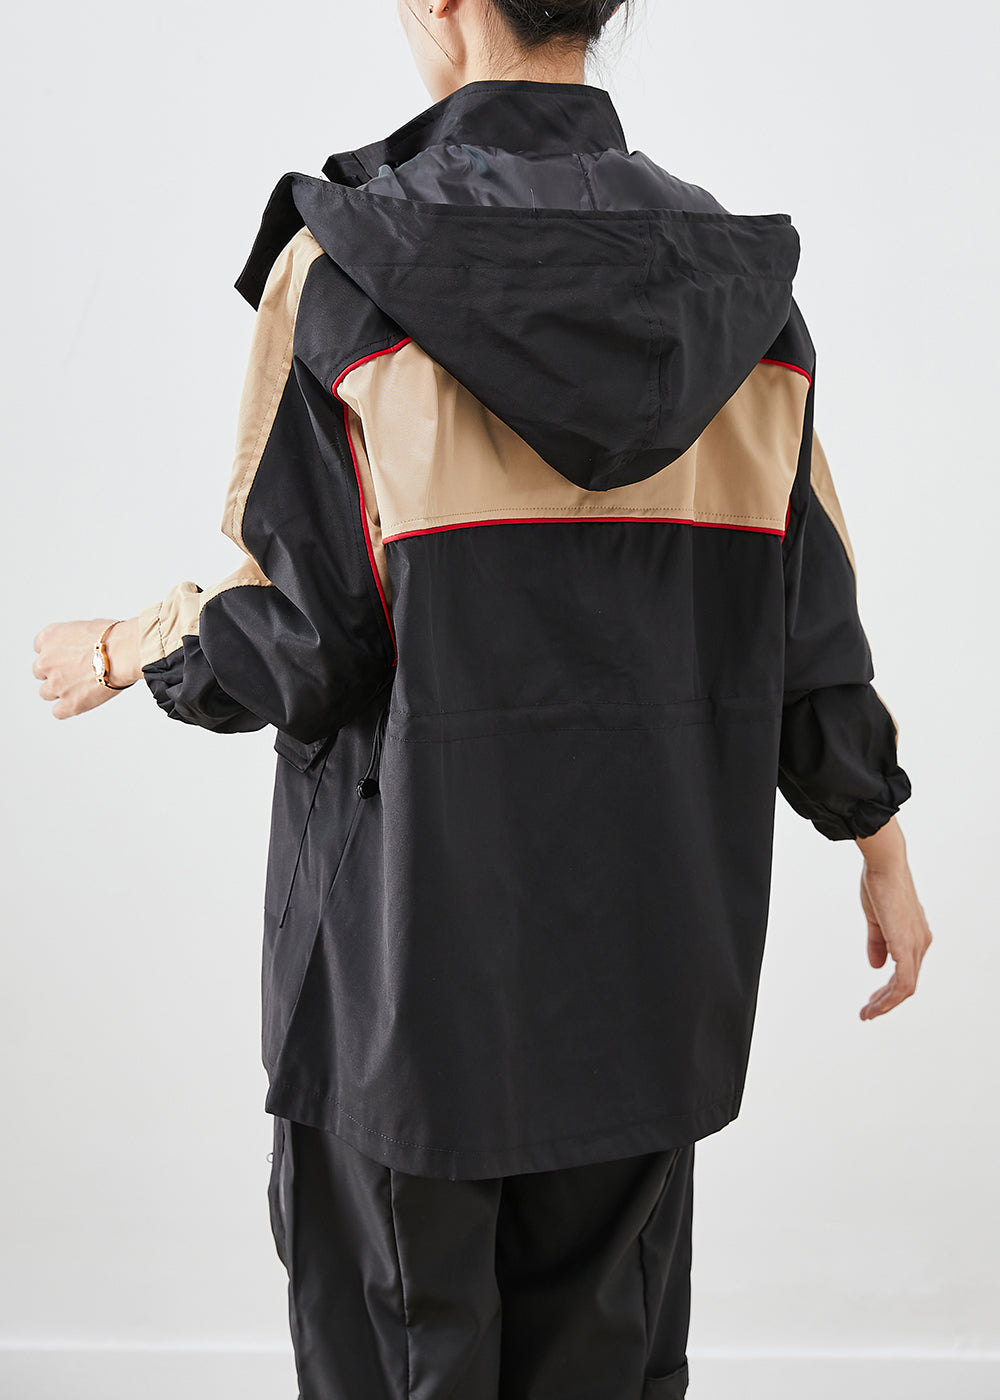 Handmade Black Hooded Patchwork Applique Spandex Jacket Fall